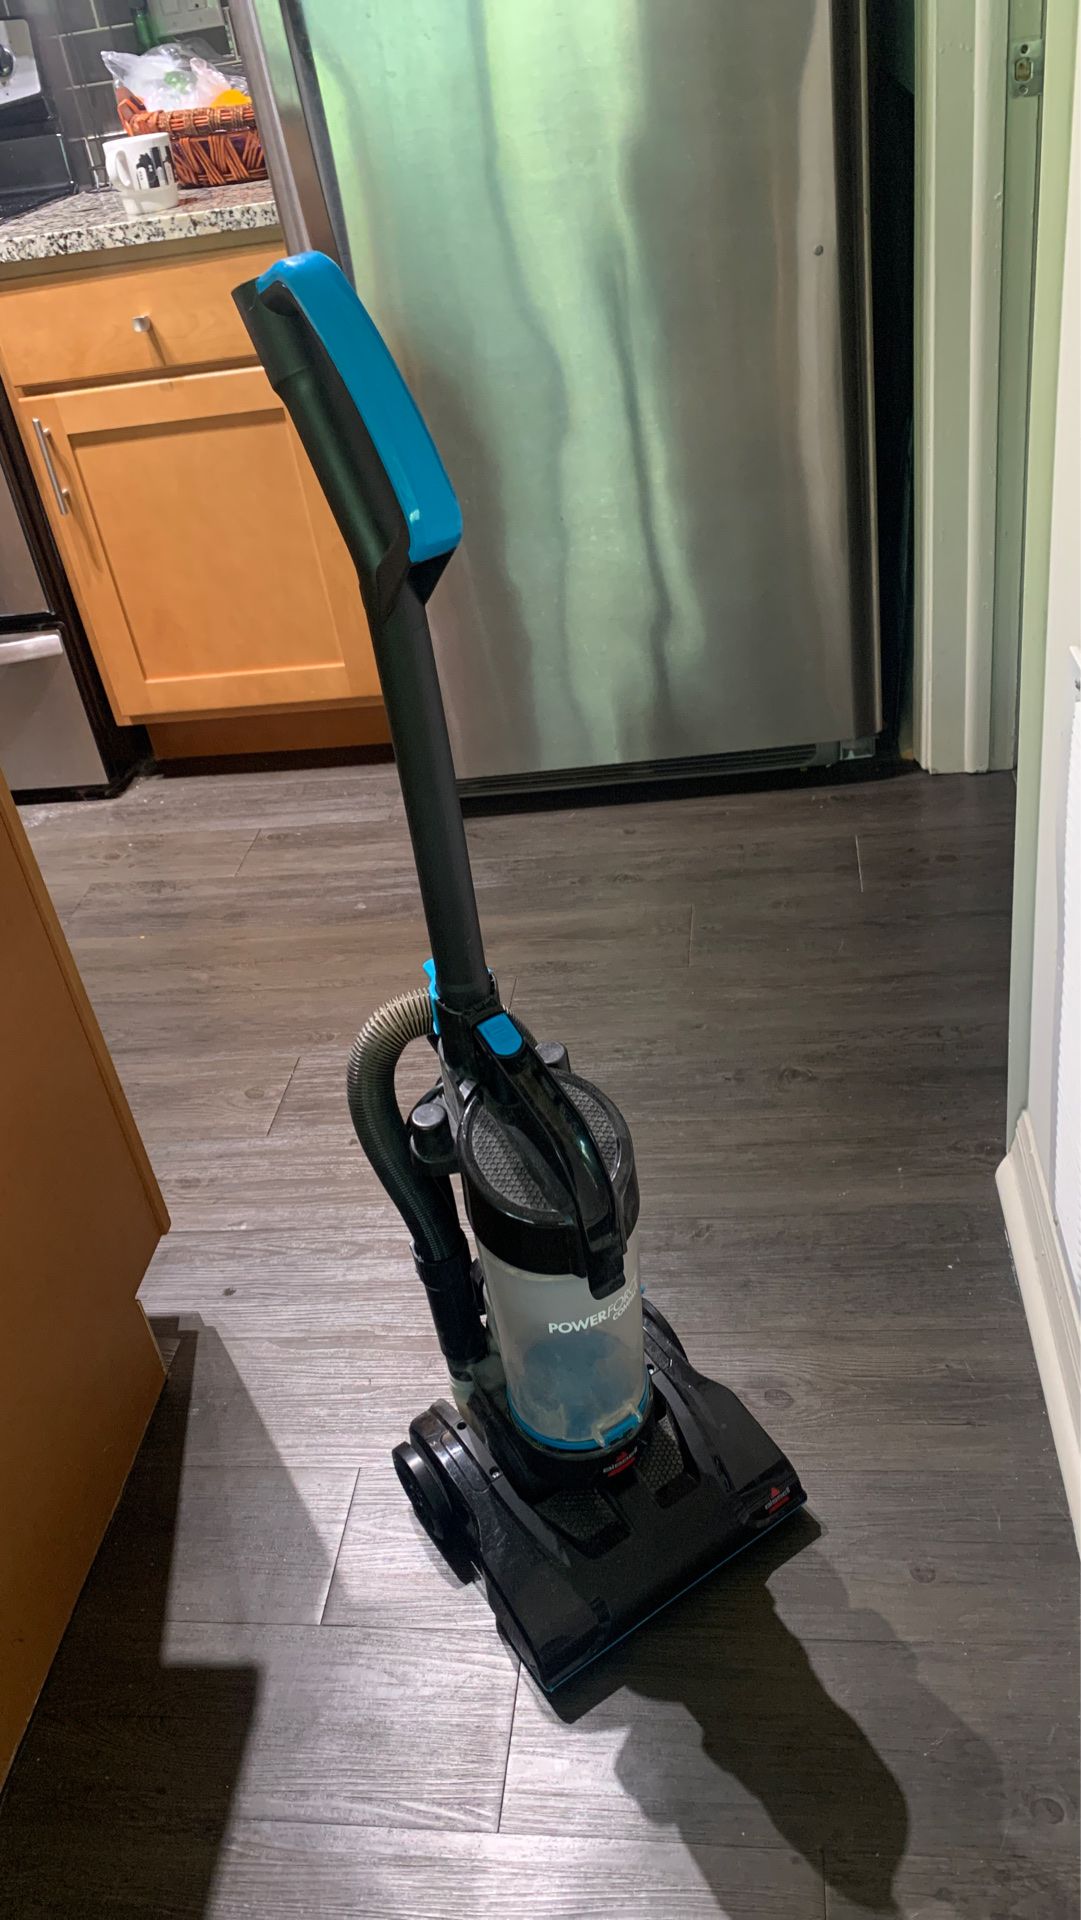 Bissel vacuum cleaner for carpets